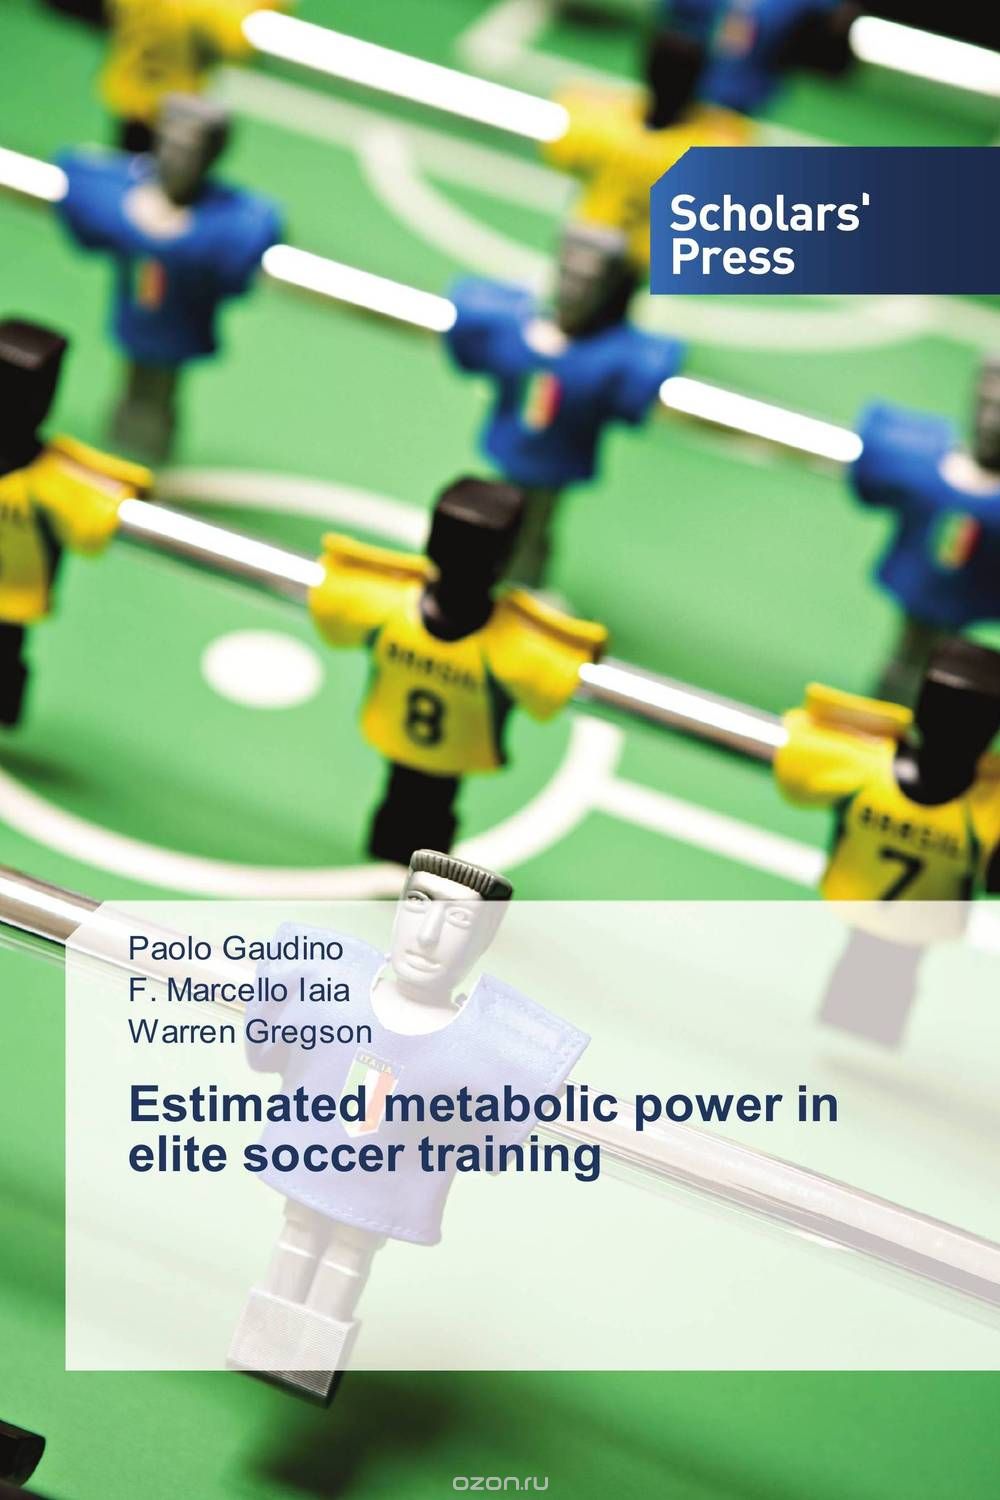 Скачать книгу "Estimated metabolic power in elite soccer training"